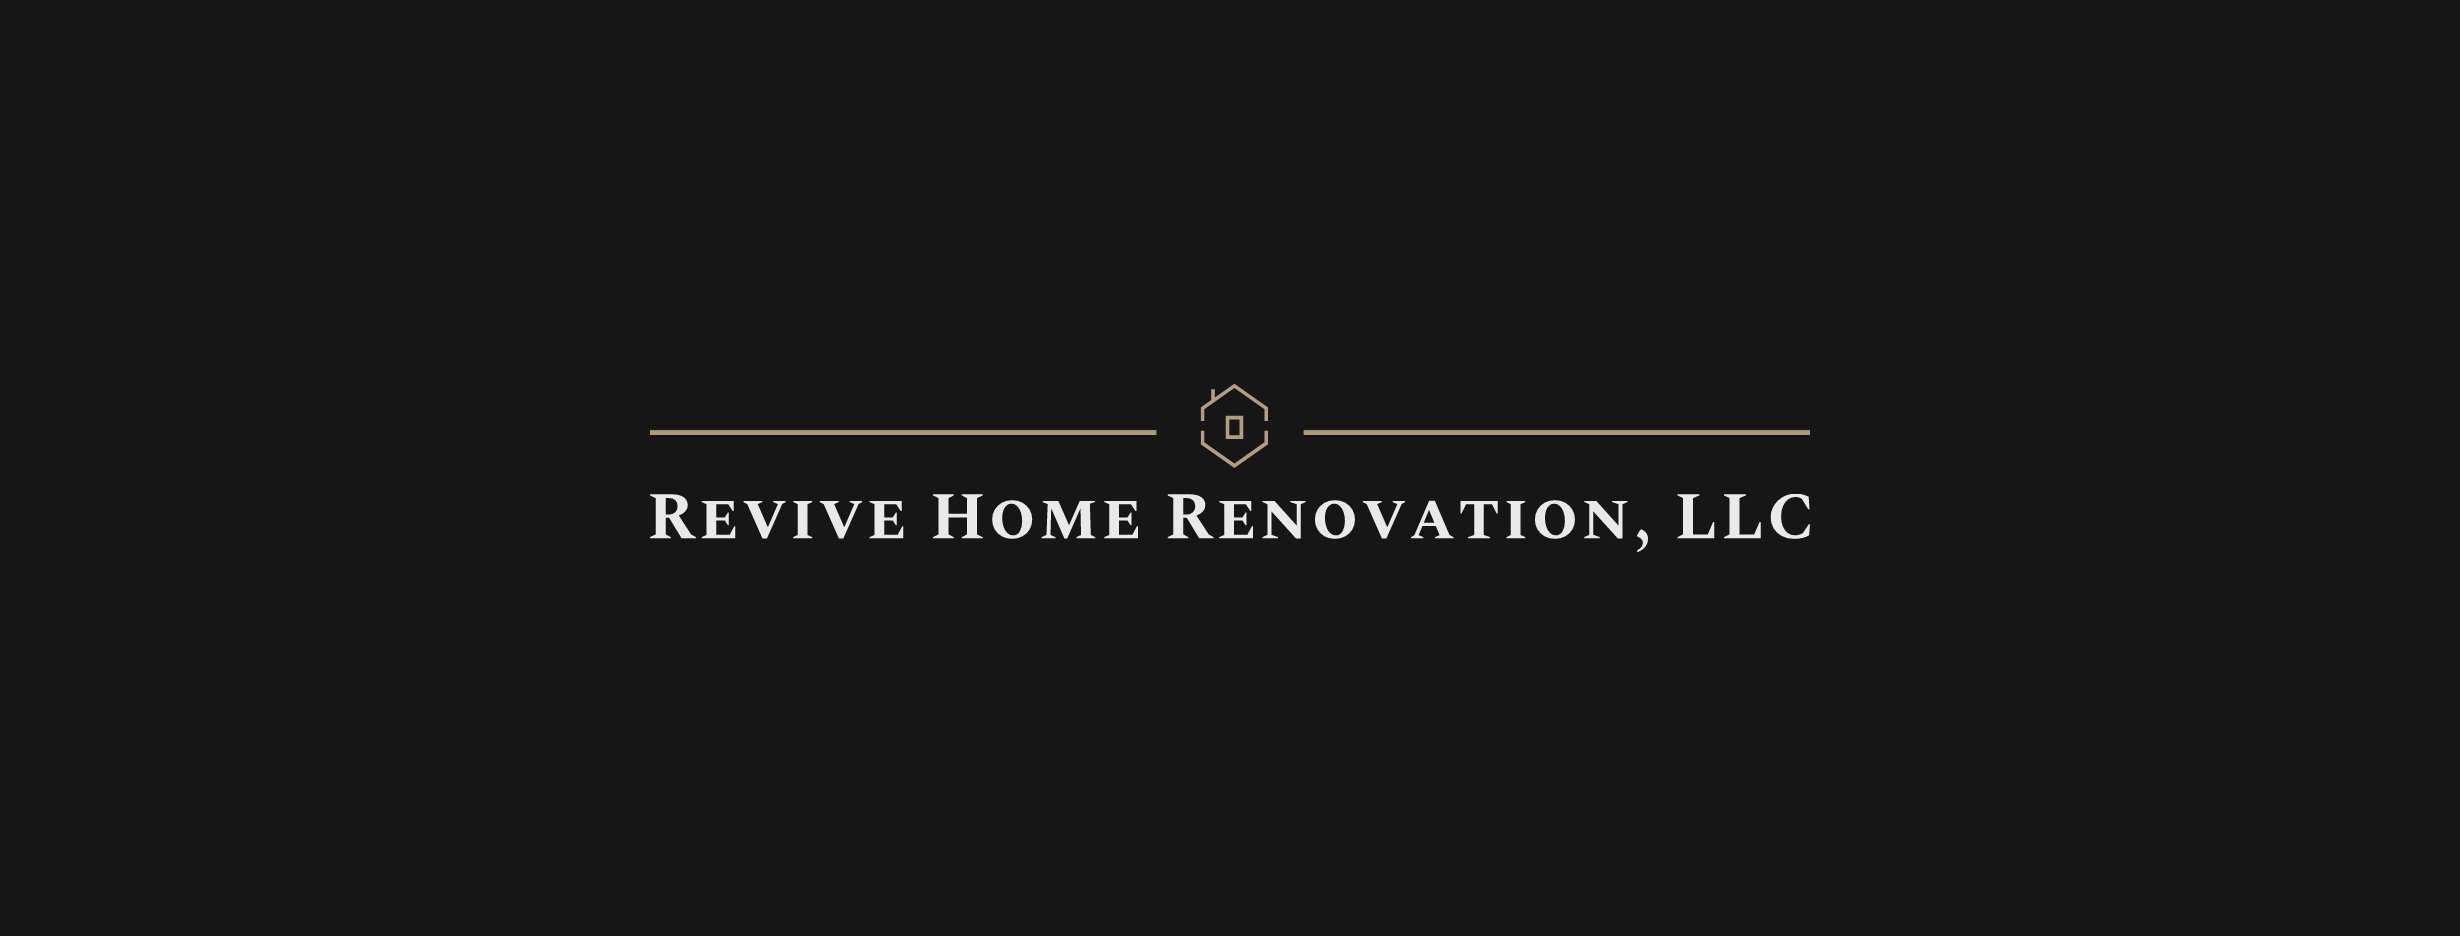 Revive Home Renovation, LLC Logo